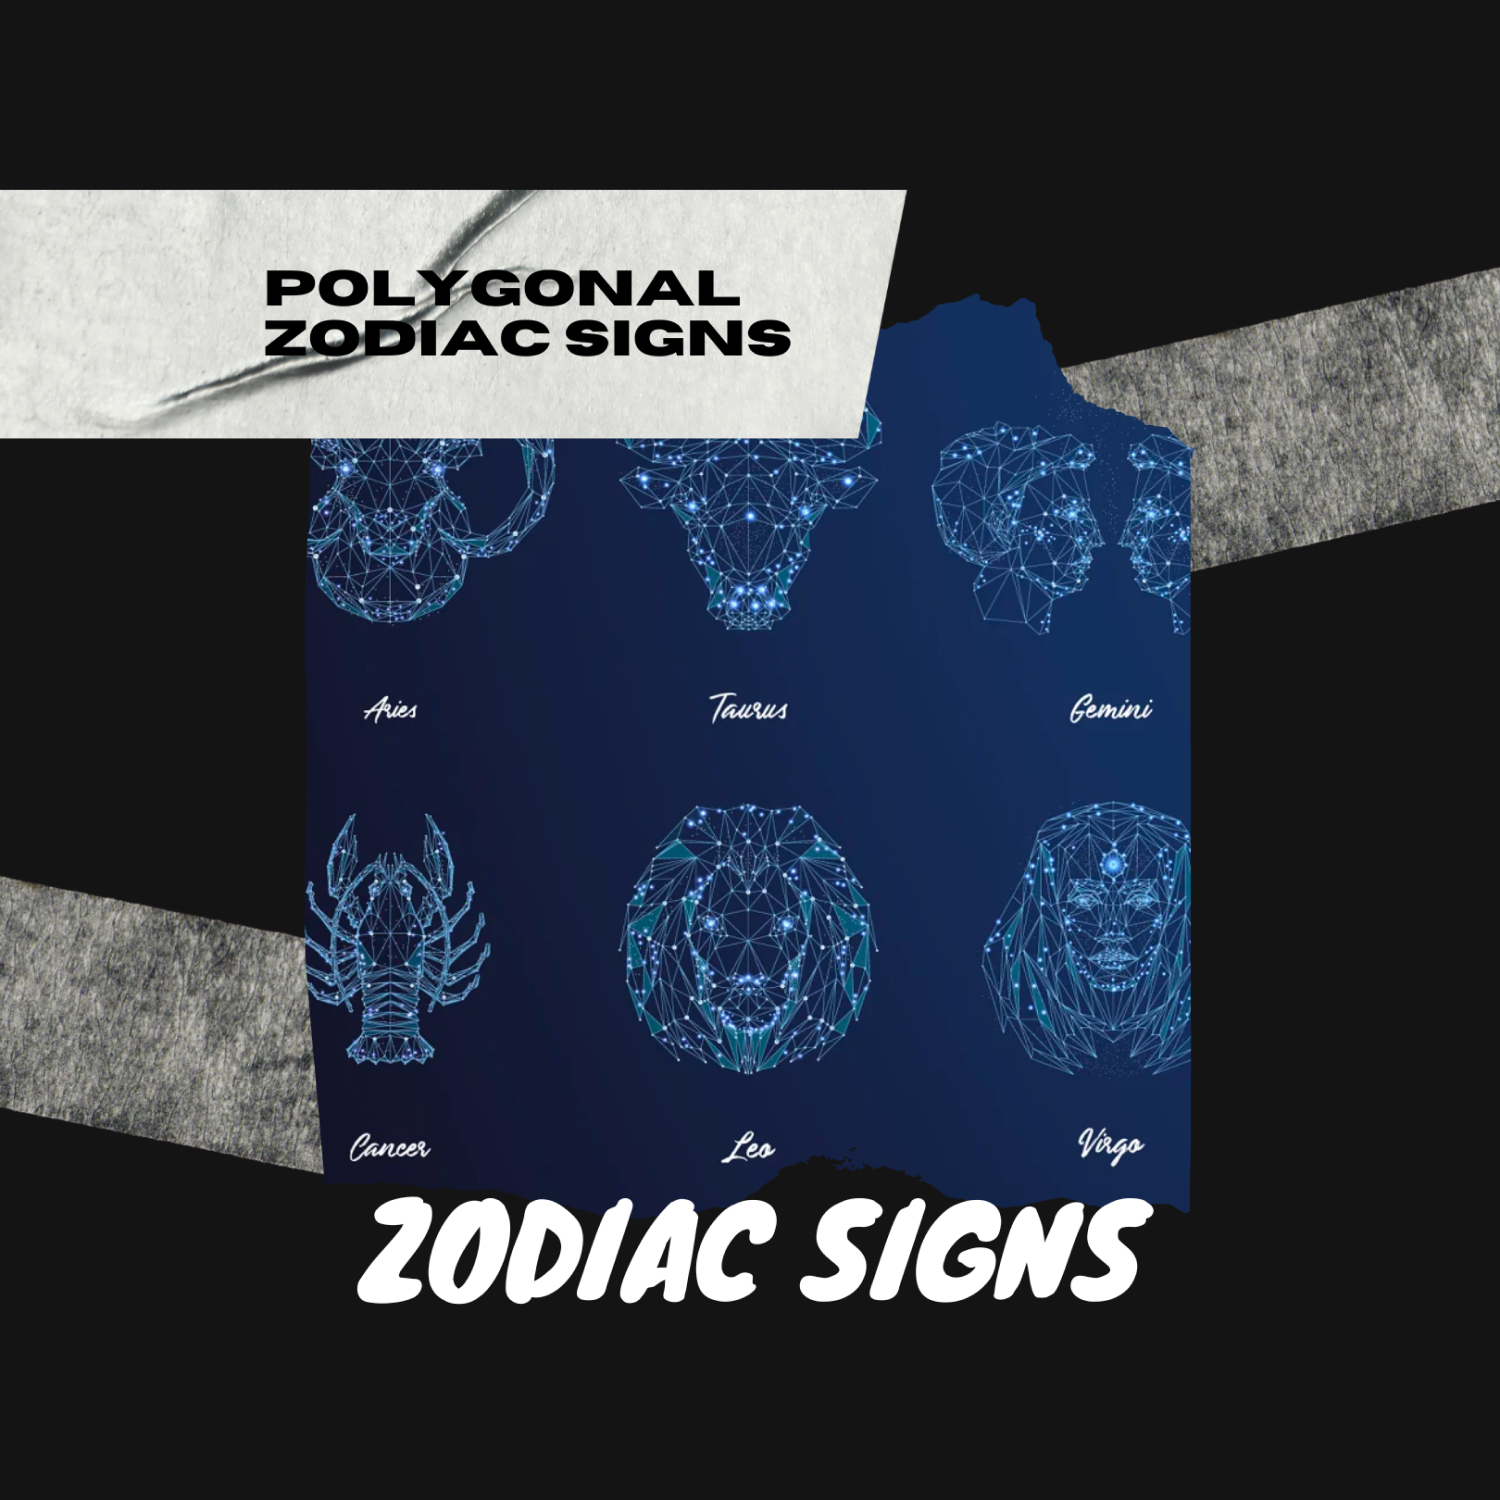 Polygonal Zodiac Signs.